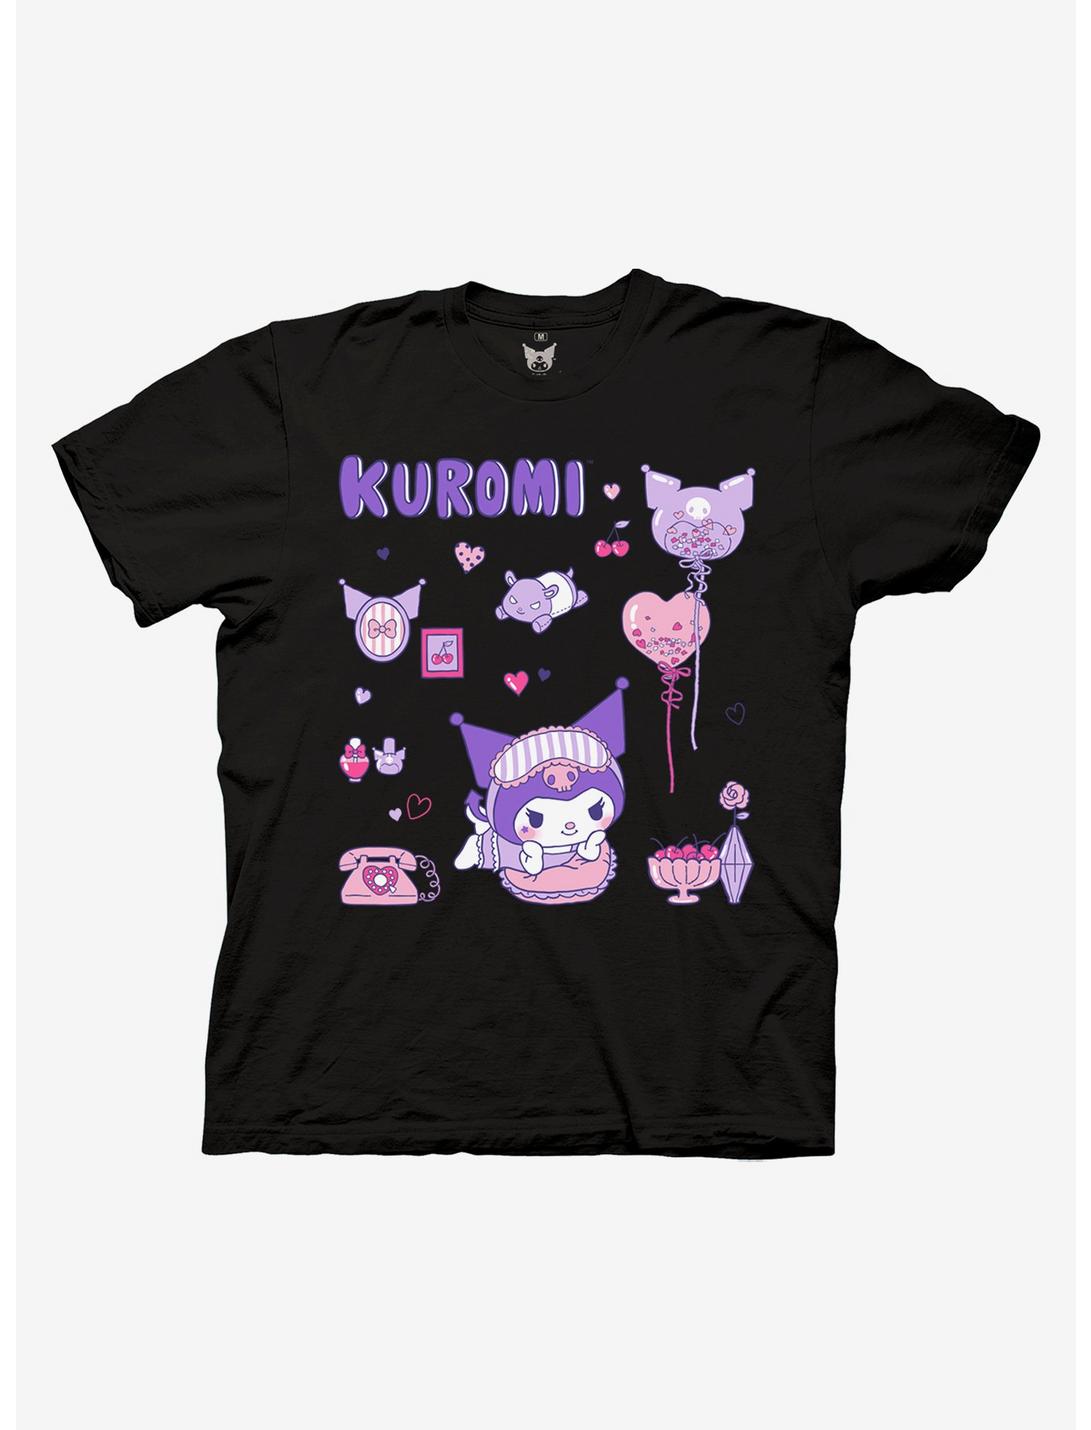 Kuromi Sleepover Boyfriend Fit Girls T-Shirt, MULTI, hi-res